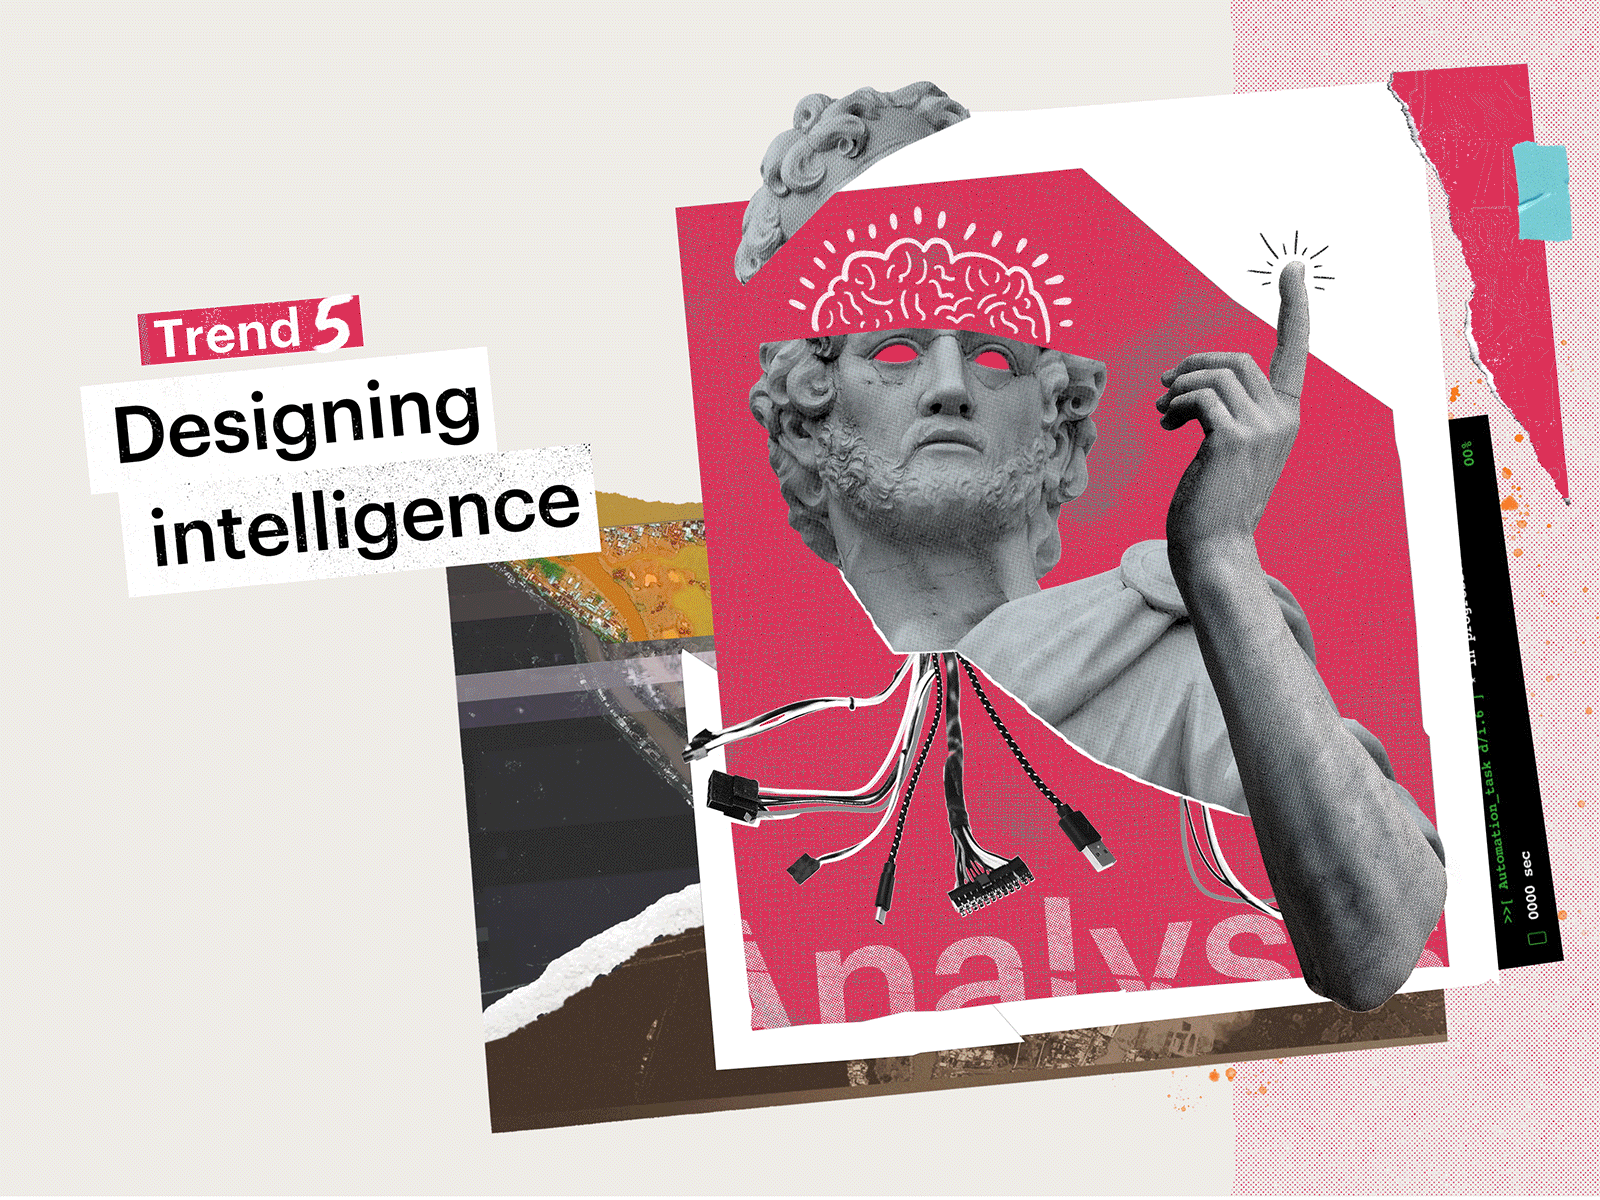 Trend 5 - Designing intelligence